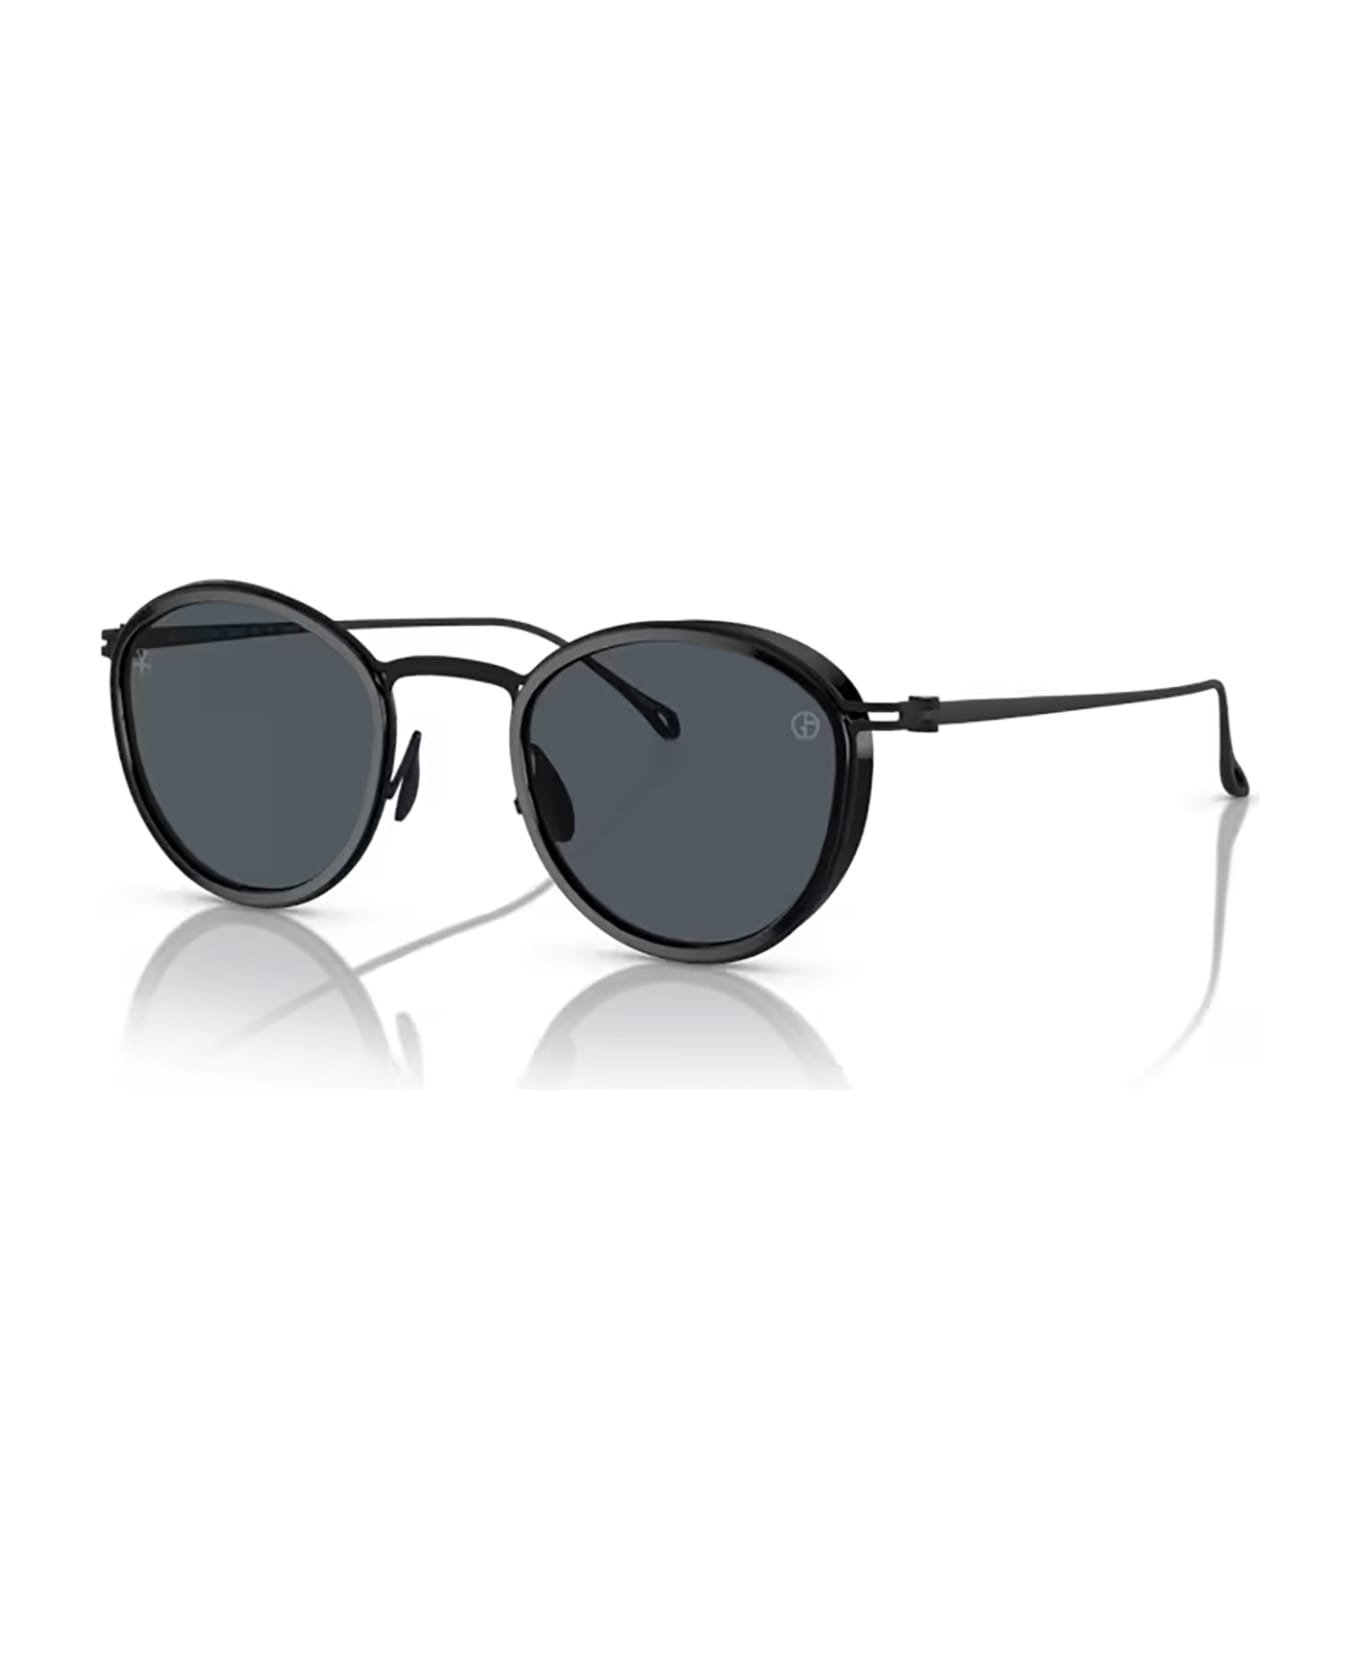 Giorgio Armani Ar6148t Shiny Black Sunglasses - Shiny Black